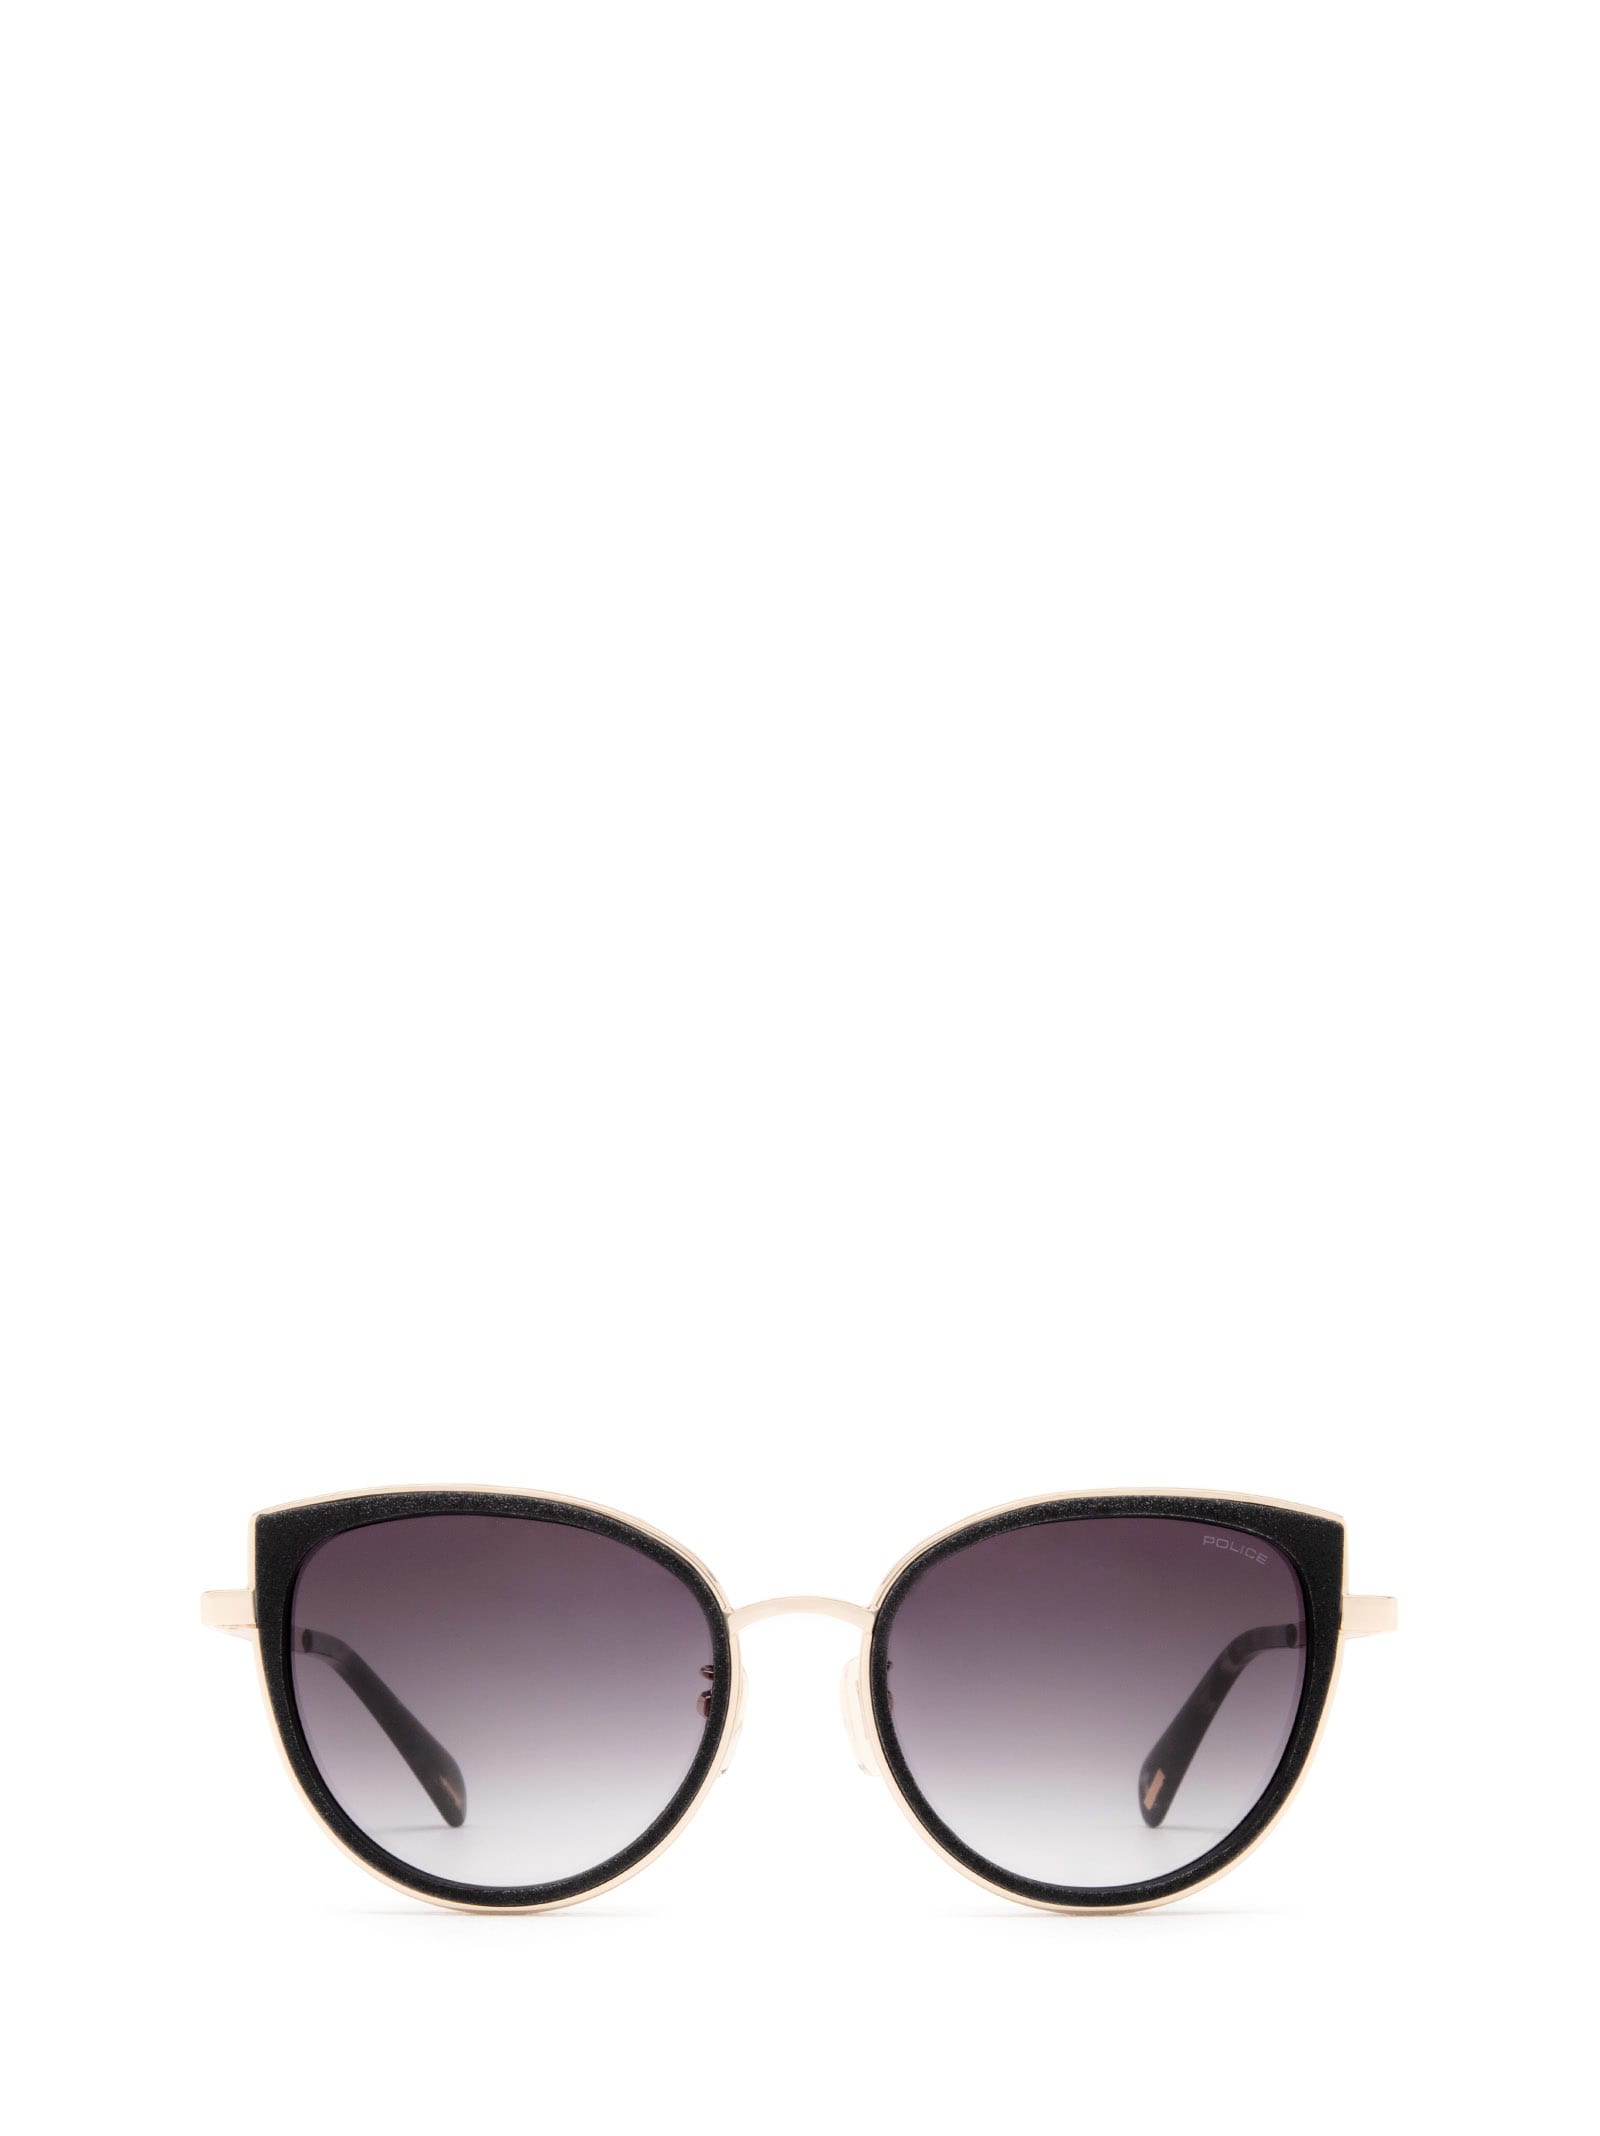 Spld83 Black Sunglasses